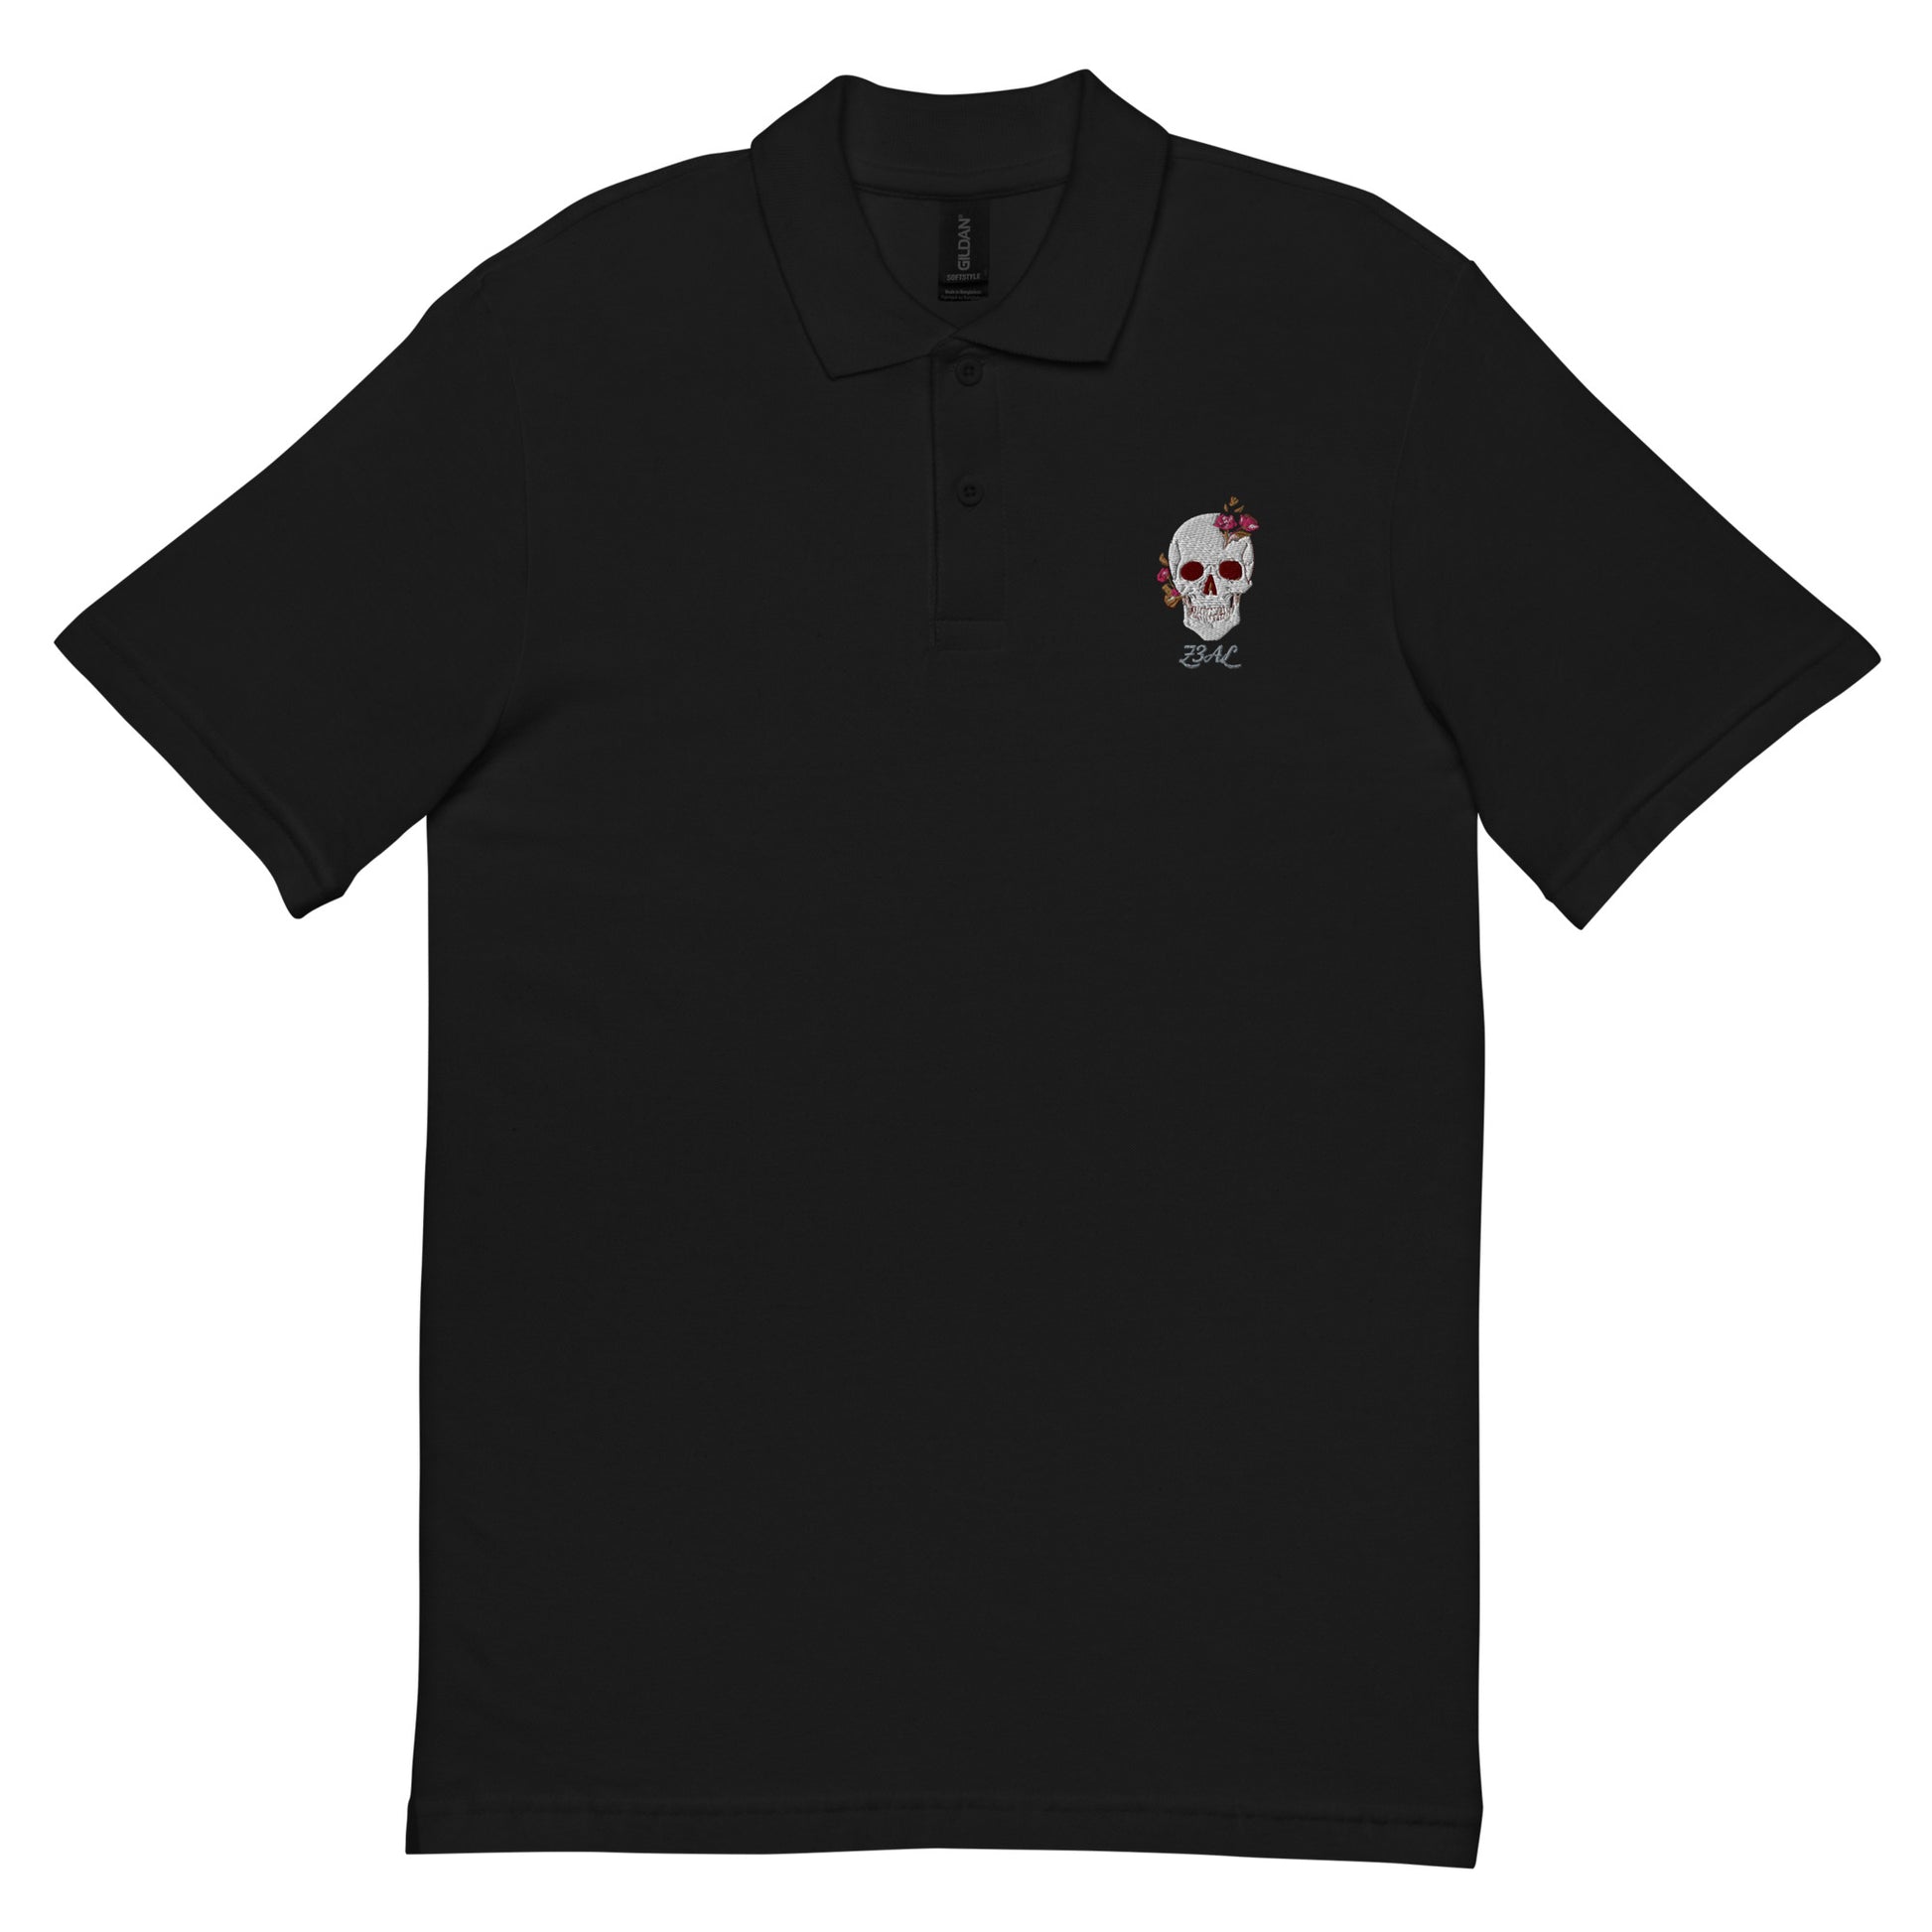 Men's black polo t-shirt | Pique Embroidered Polo Shirt | men's shirts short sleeve | Onlyz3al